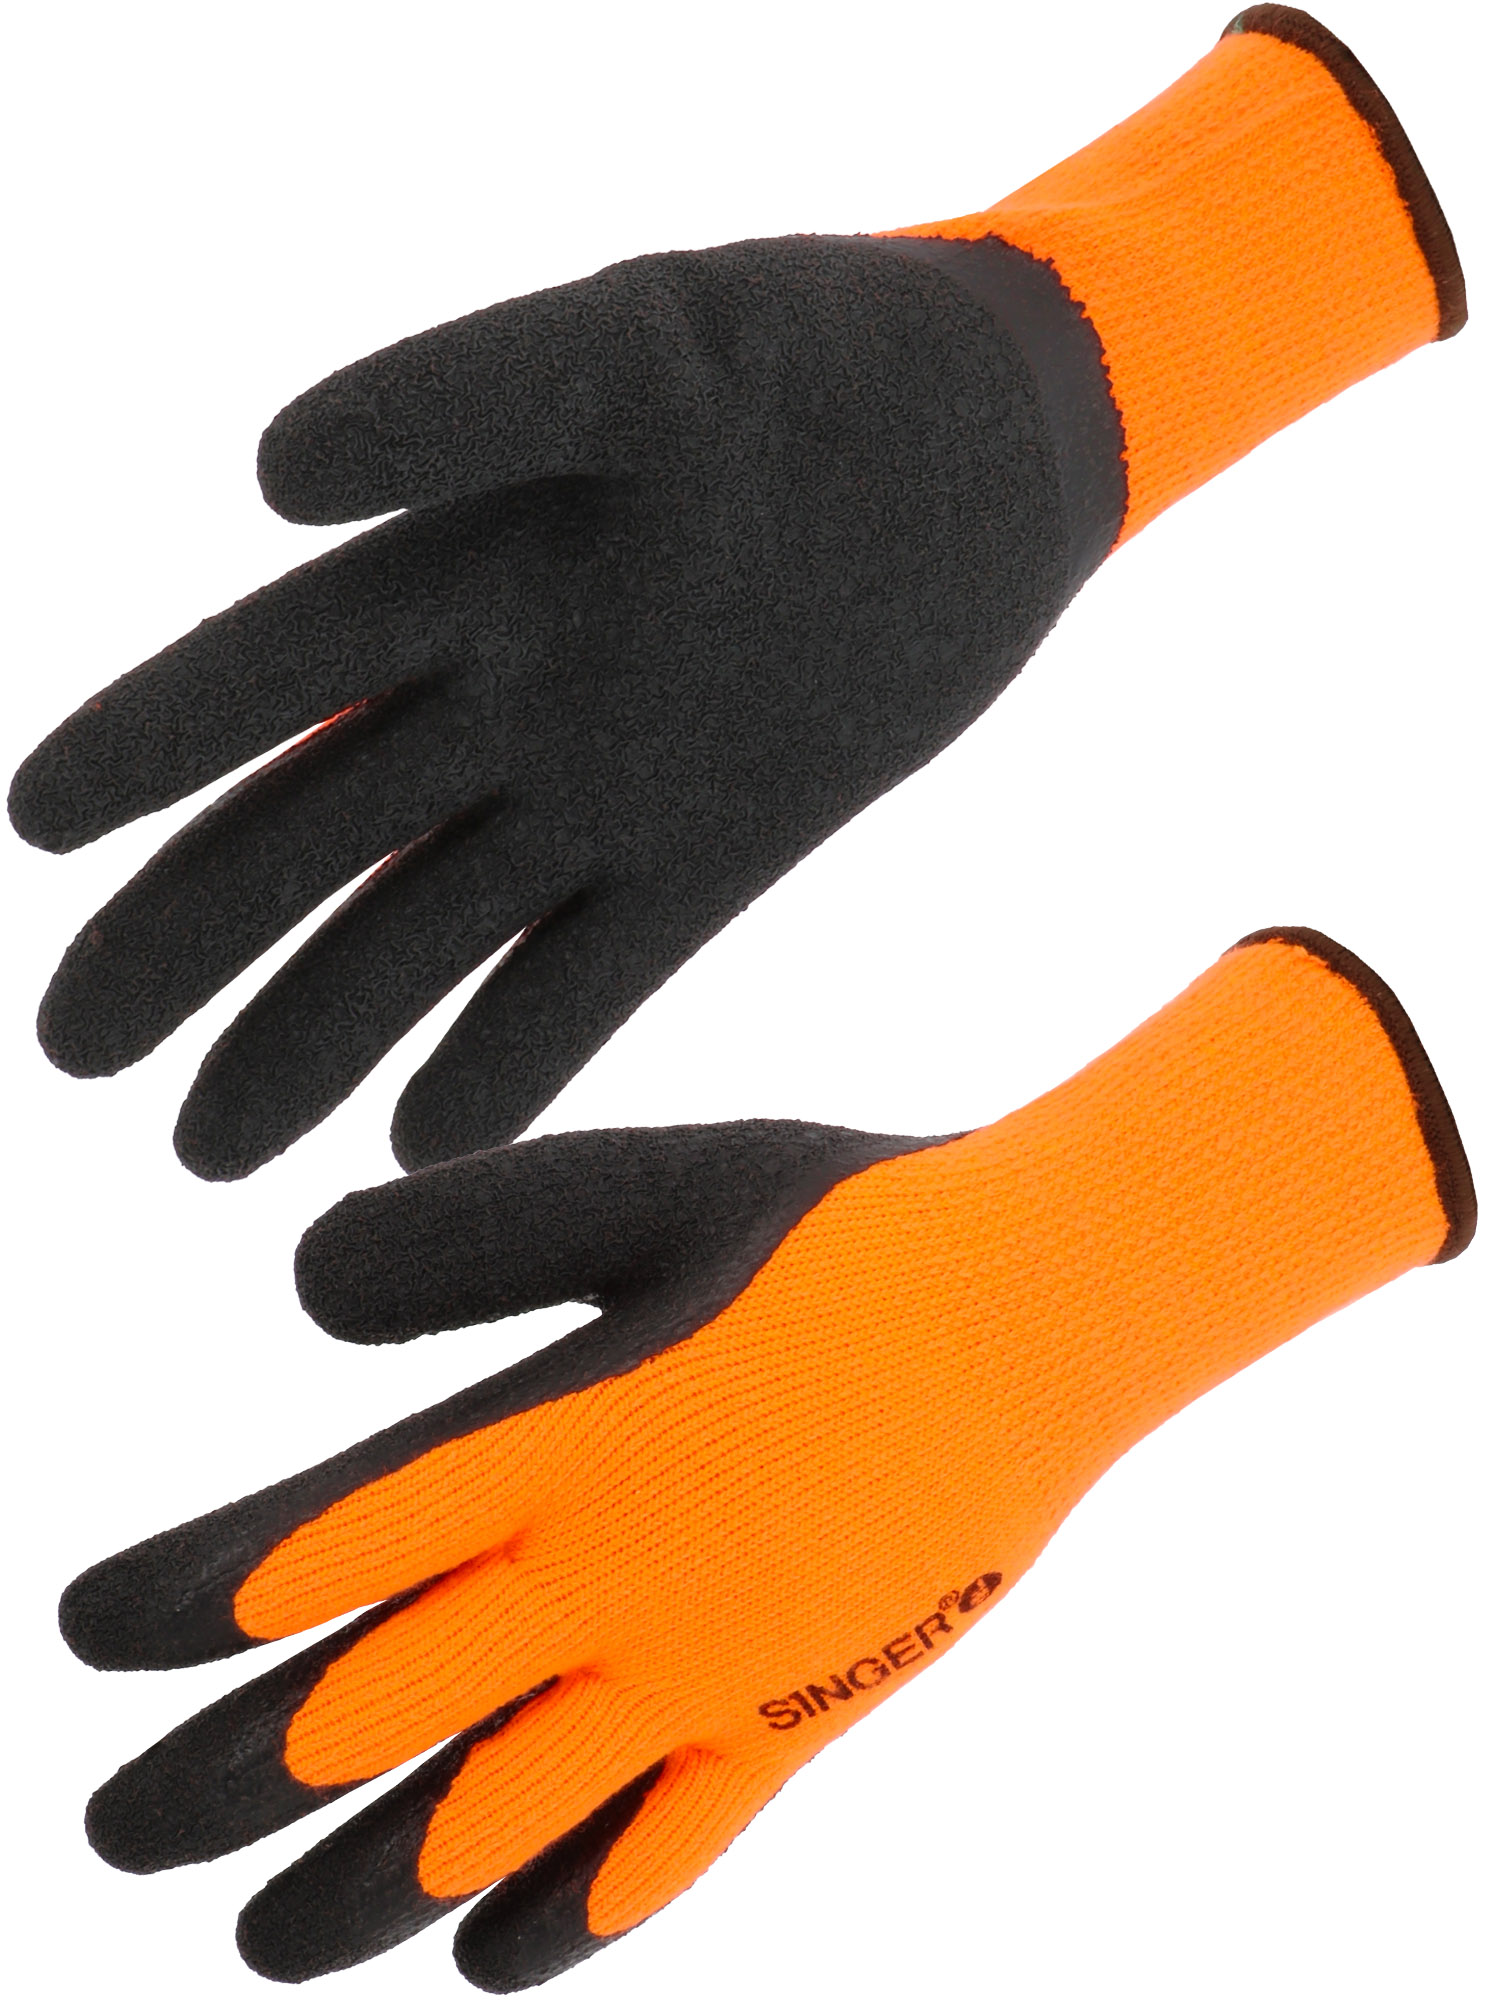 Item Crinkle latex glove. Acrylic terry liner. 10 gauge.